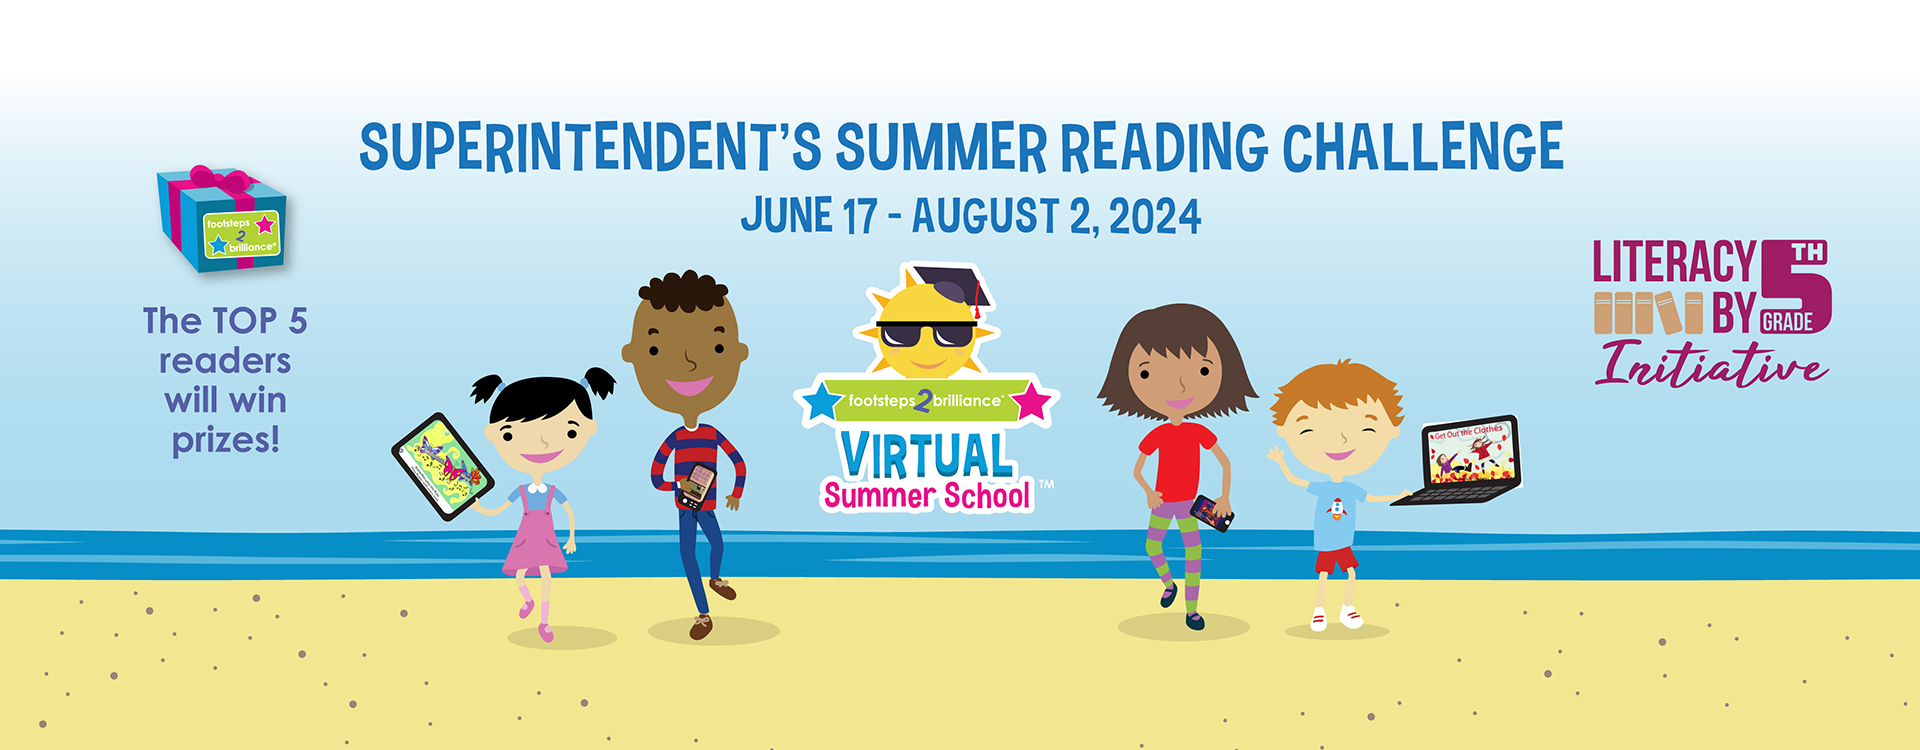 Superintendent's Summer Reading Challenge. Footsteps2Brilliance Virtual Summer School